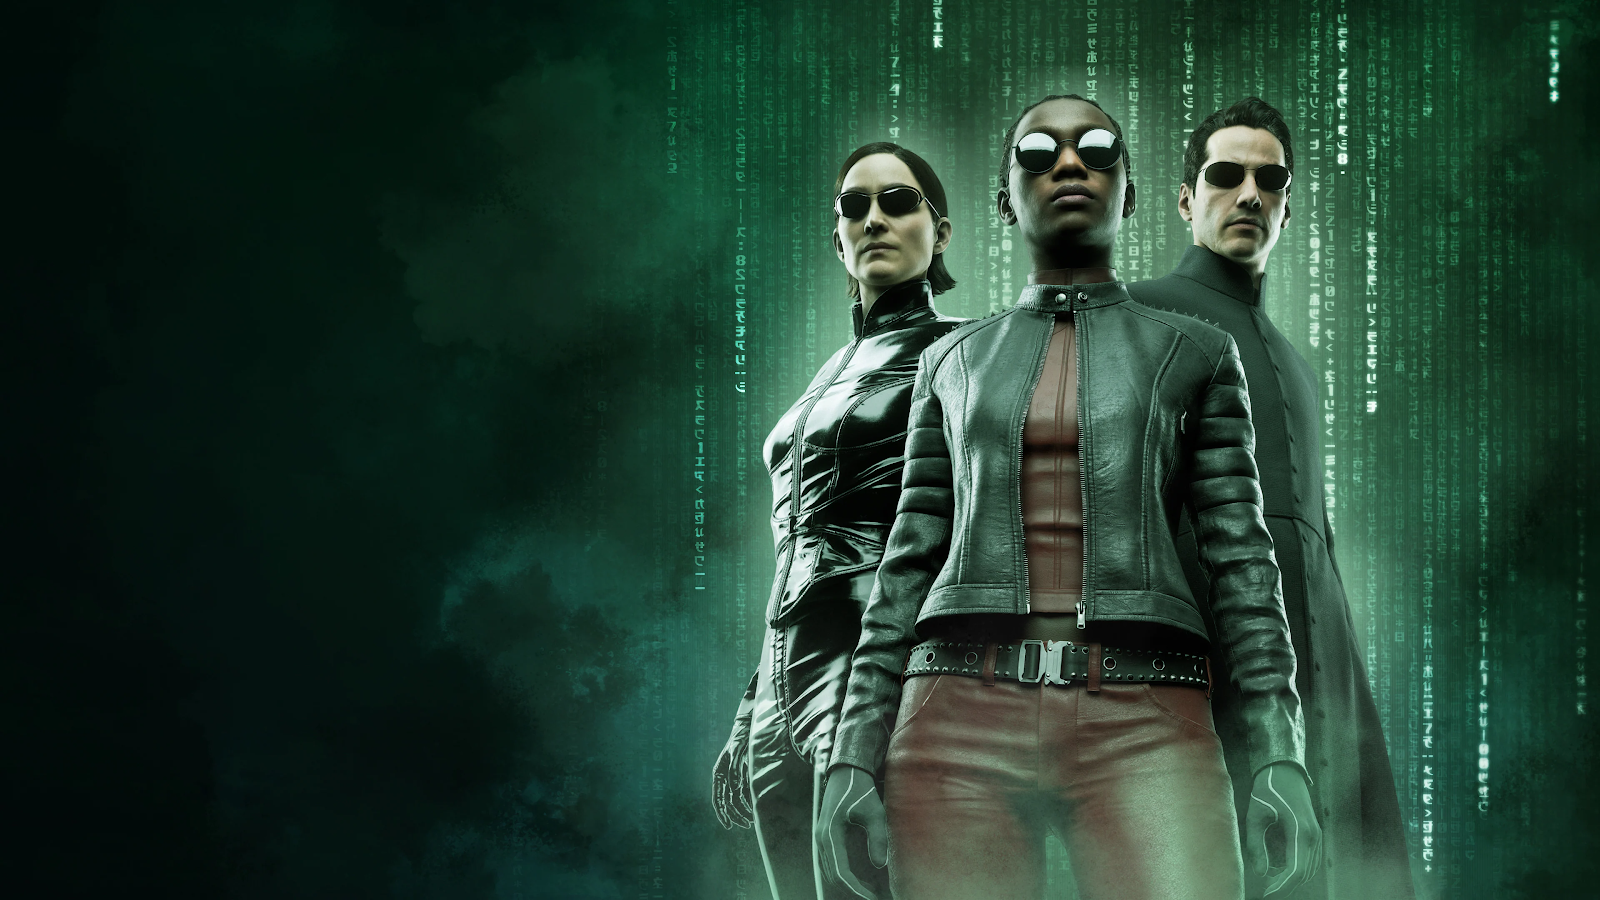 Matrix story unfolds in the near future